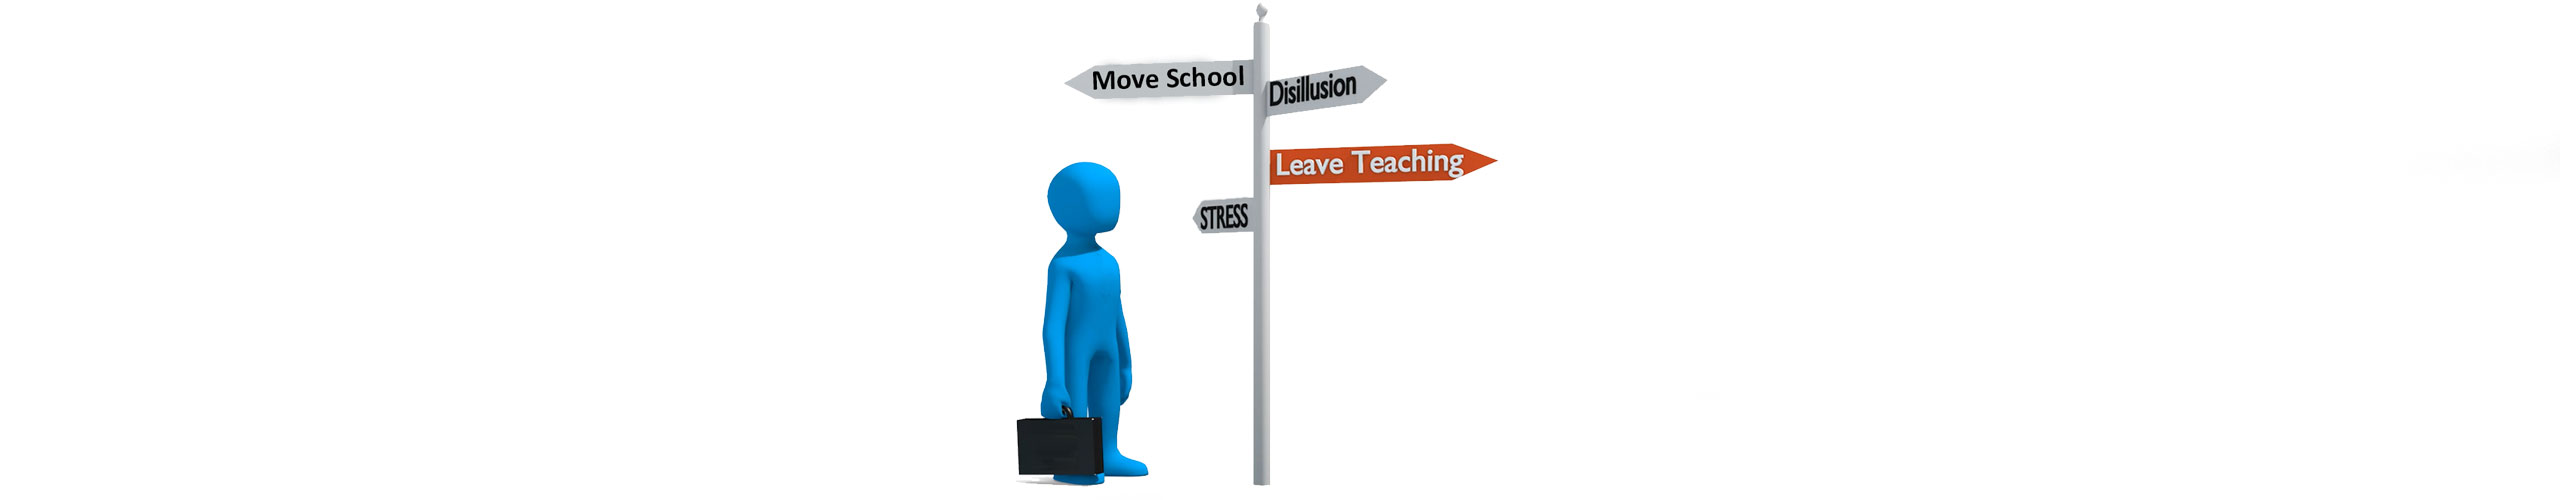 Thinking of Leaving Teaching?